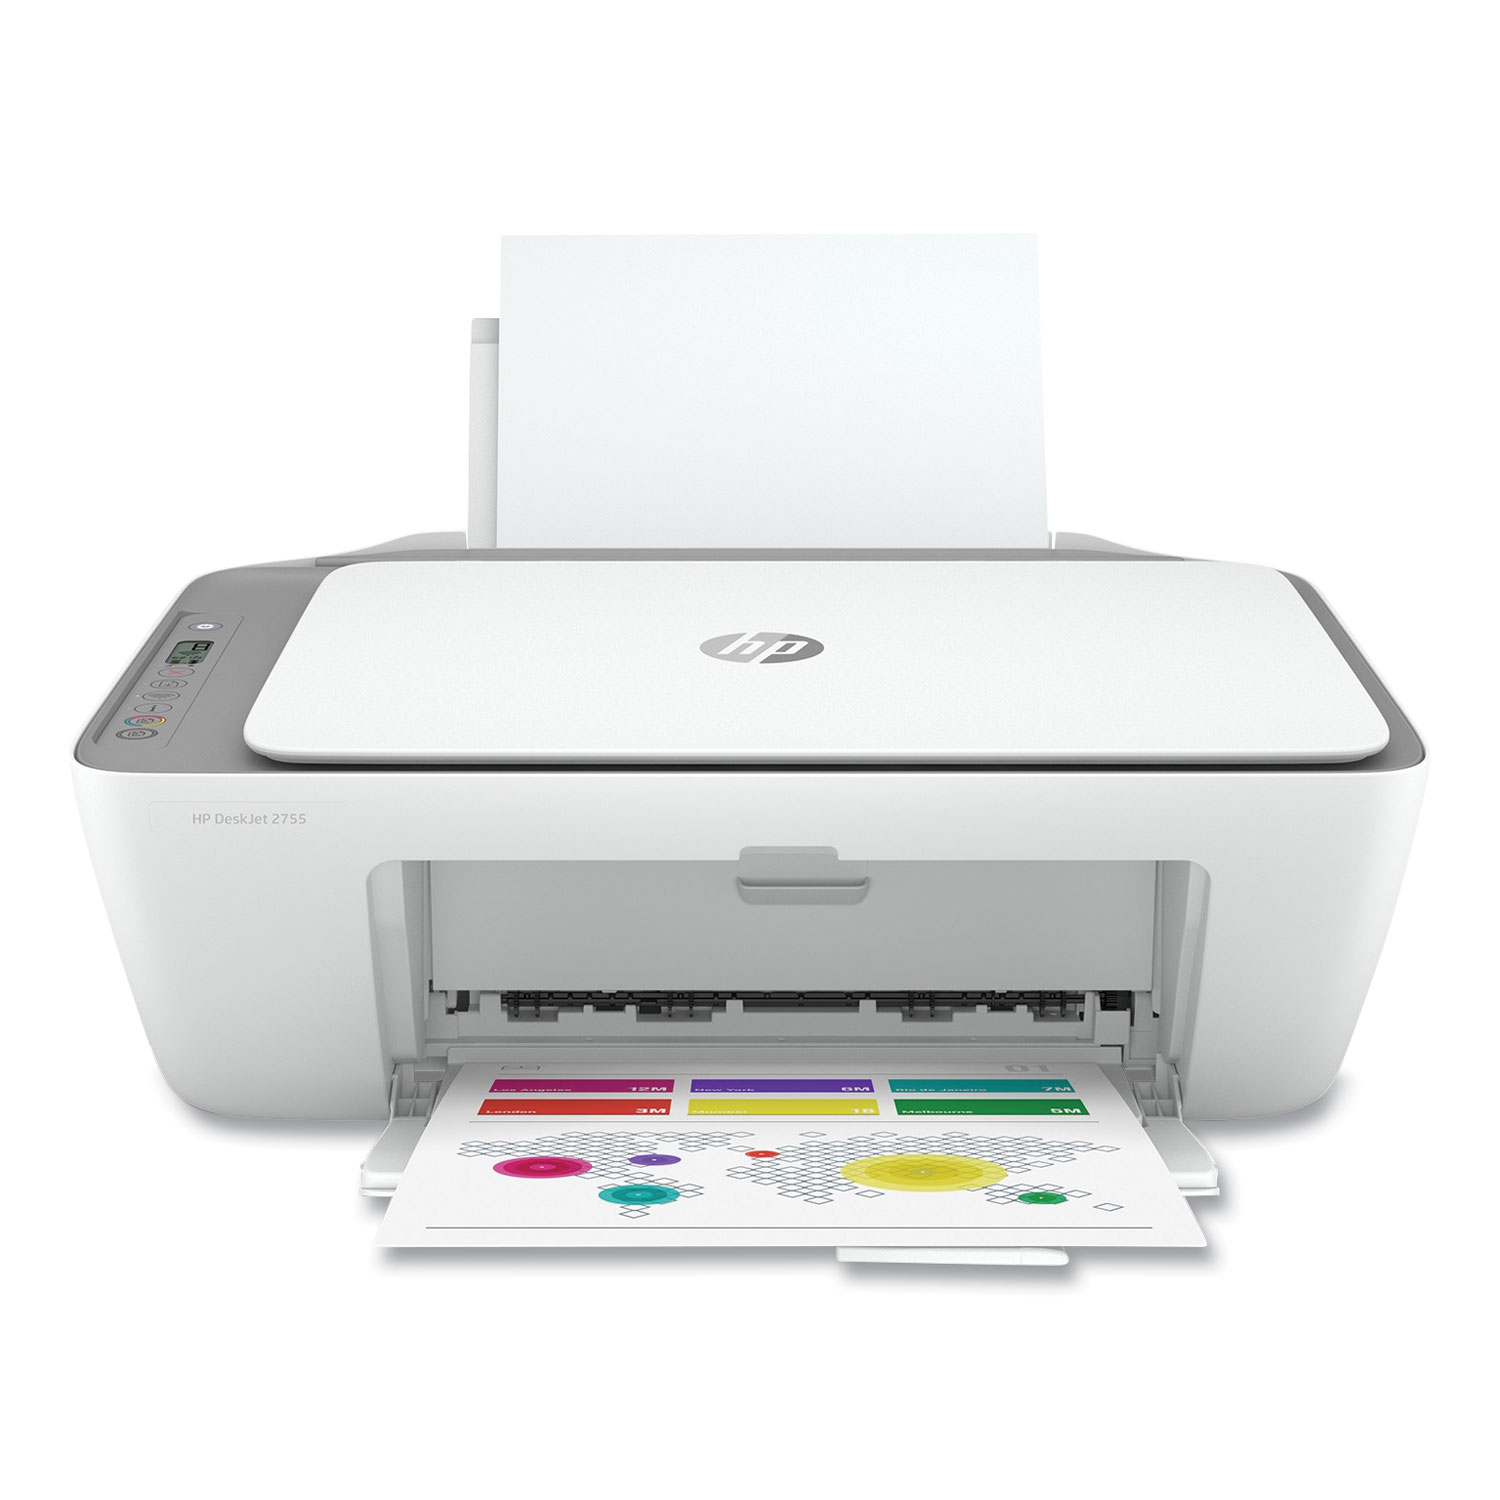 HP Remanufactured DeskJet 2755 All-in-One Printer, Copy; Print; Scan